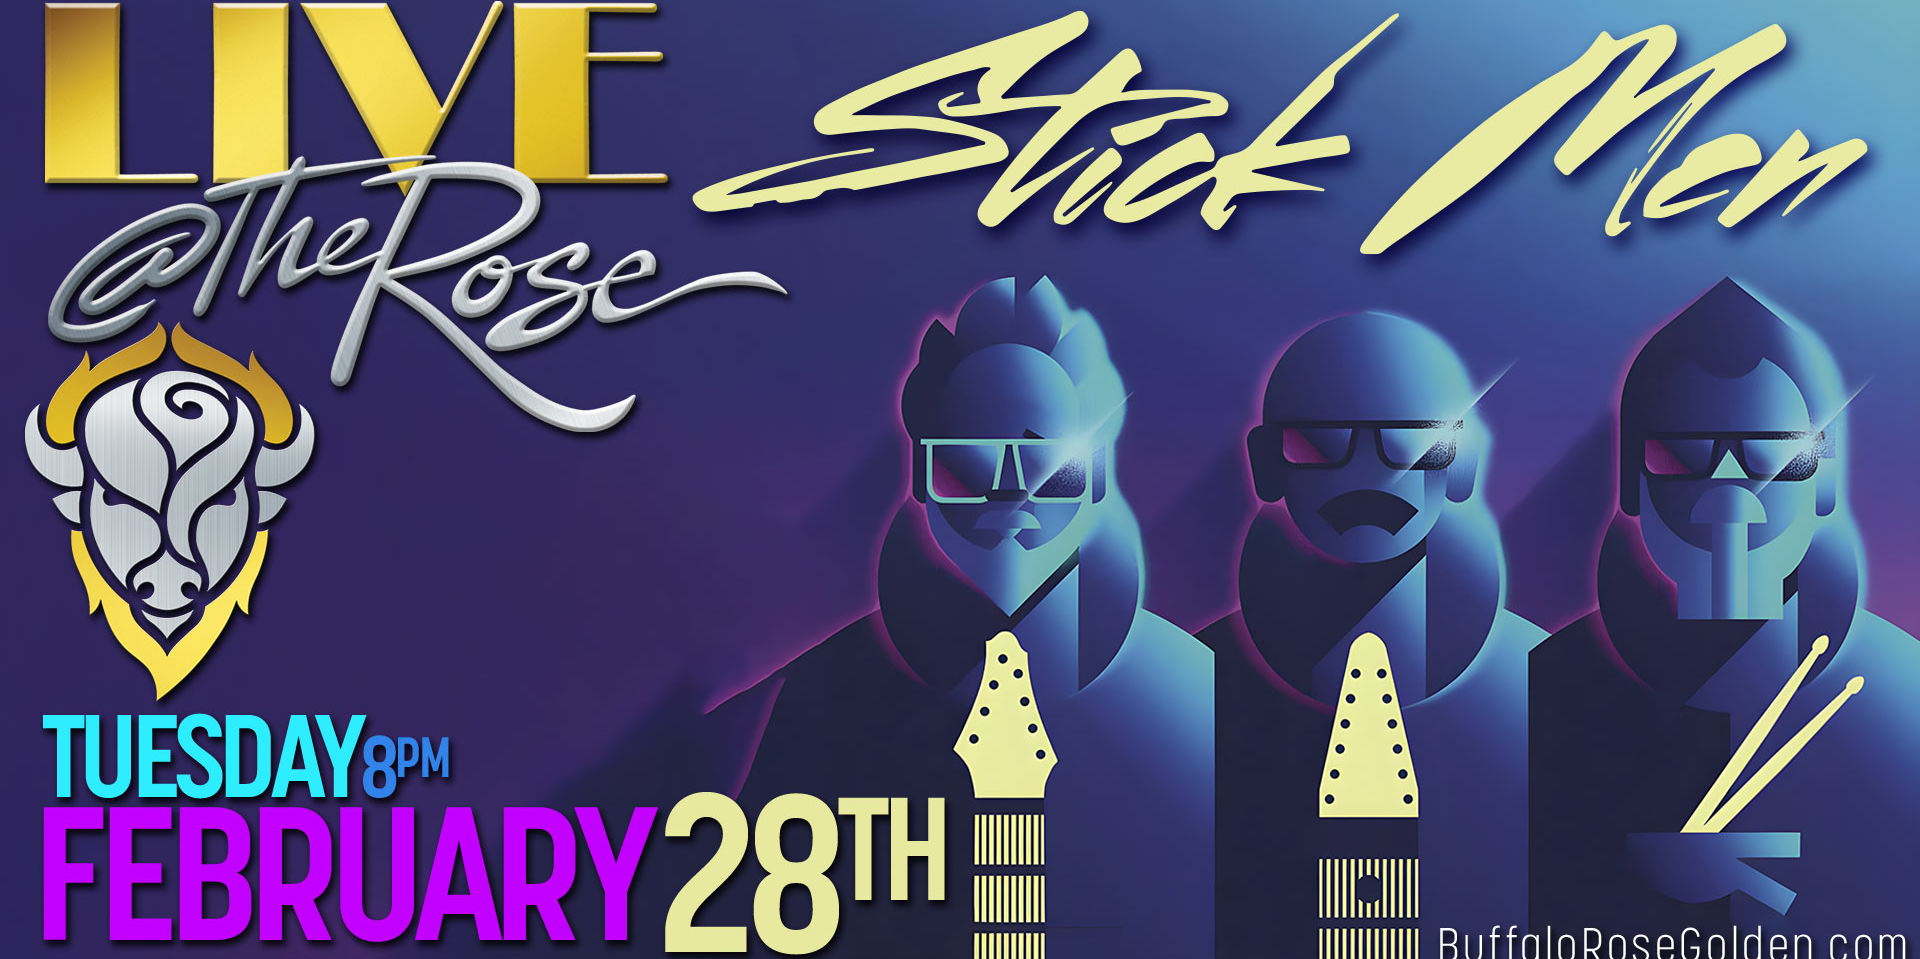 Live @ The Rose - Stick Men promotional image